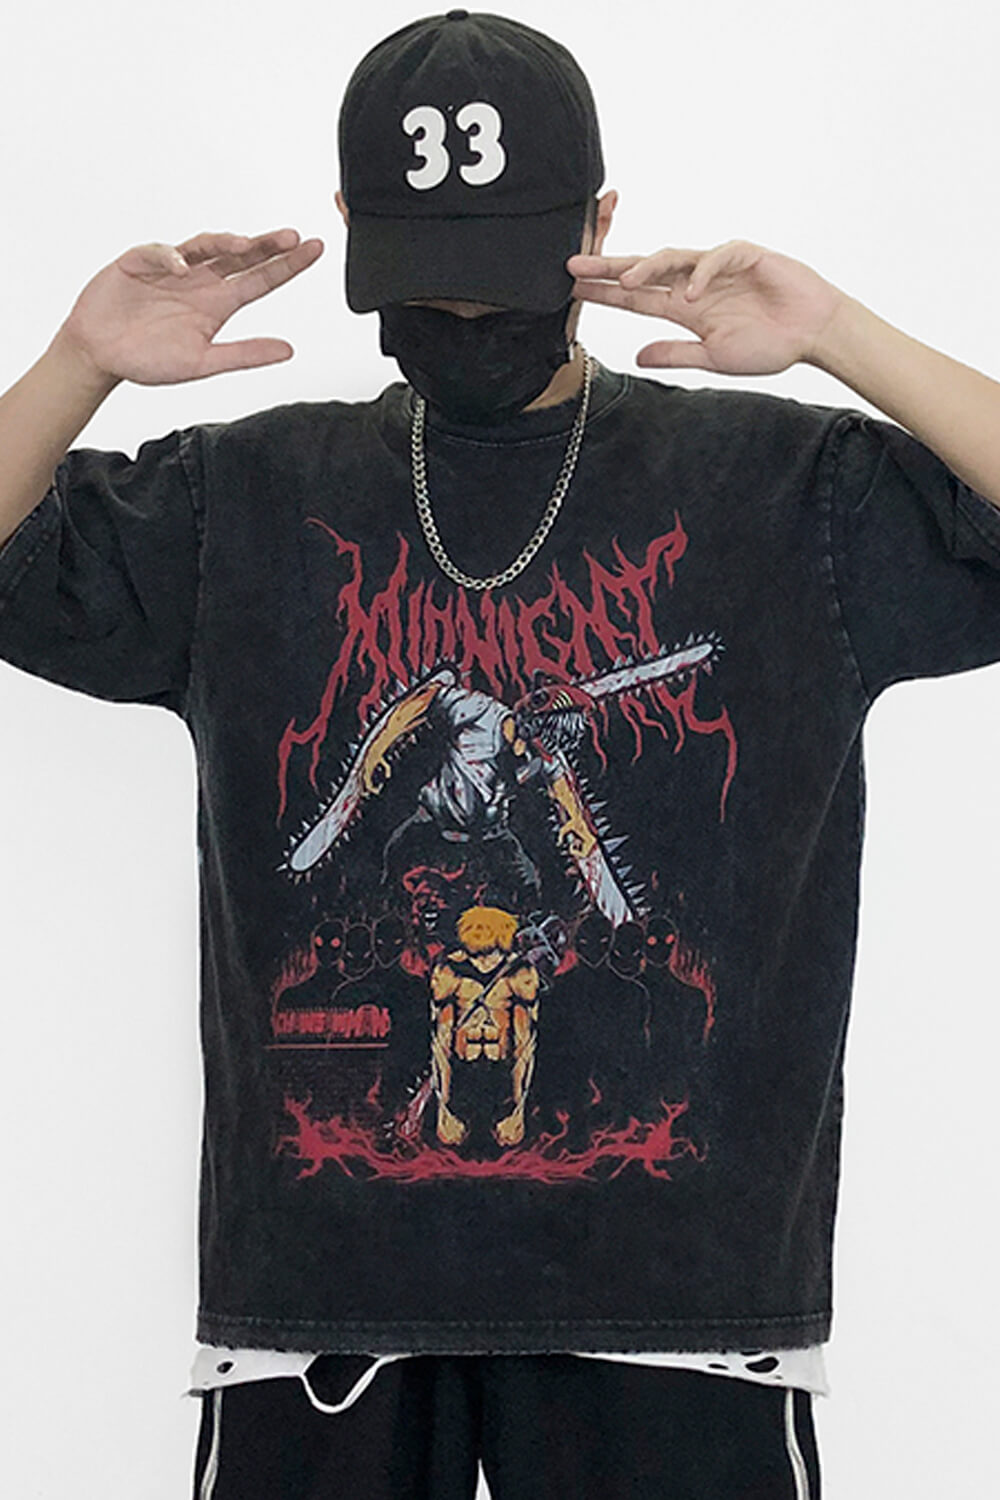 Denji Devil Form Grunge T-Shirt Chainsaw Man